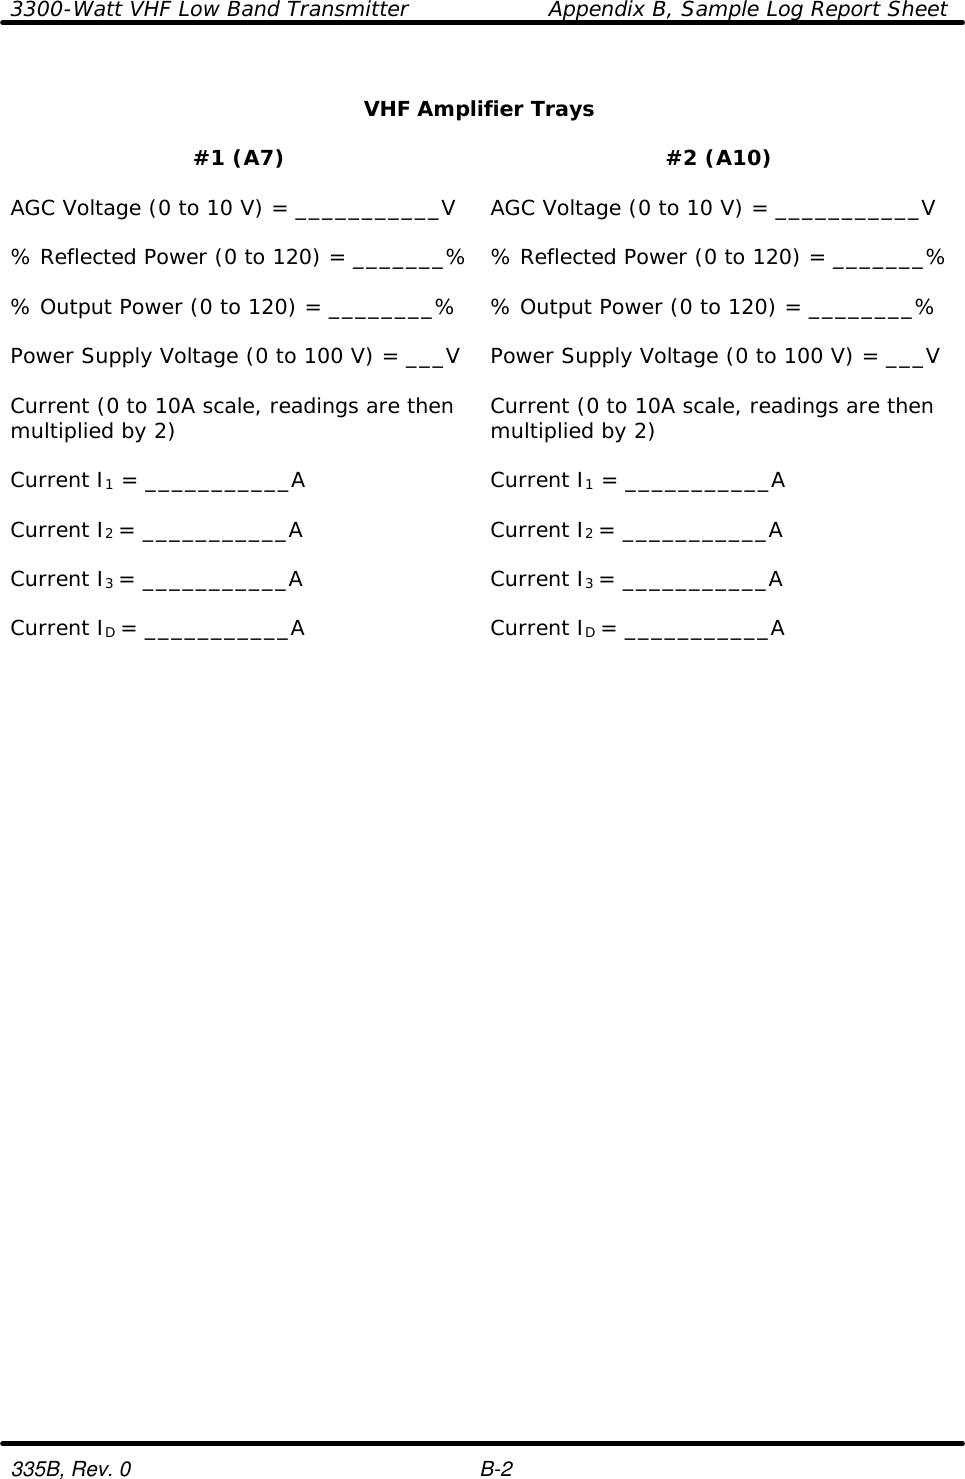 3300-Watt VHF Low Band Transmitter    Appendix B, Sample Log Report Sheet  335B, Rev. 0    B-2  VHF Amplifier Trays    #1 (A7) #2 (A10)    AGC Voltage (0 to 10 V) = ___________V AGC Voltage (0 to 10 V) = ___________V    % Reflected Power (0 to 120) = _______% % Reflected Power (0 to 120) = _______%    % Output Power (0 to 120) = ________% % Output Power (0 to 120) = ________%    Power Supply Voltage (0 to 100 V) = ___V Power Supply Voltage (0 to 100 V) = ___V    Current (0 to 10A scale, readings are then multiplied by 2) Current (0 to 10A scale, readings are then multiplied by 2)    Current I1 = ___________A Current I1 = ___________A    Current I2 = ___________A Current I2 = ___________A    Current I3 = ___________A Current I3 = ___________A    Current ID = ___________A Current ID = ___________A    